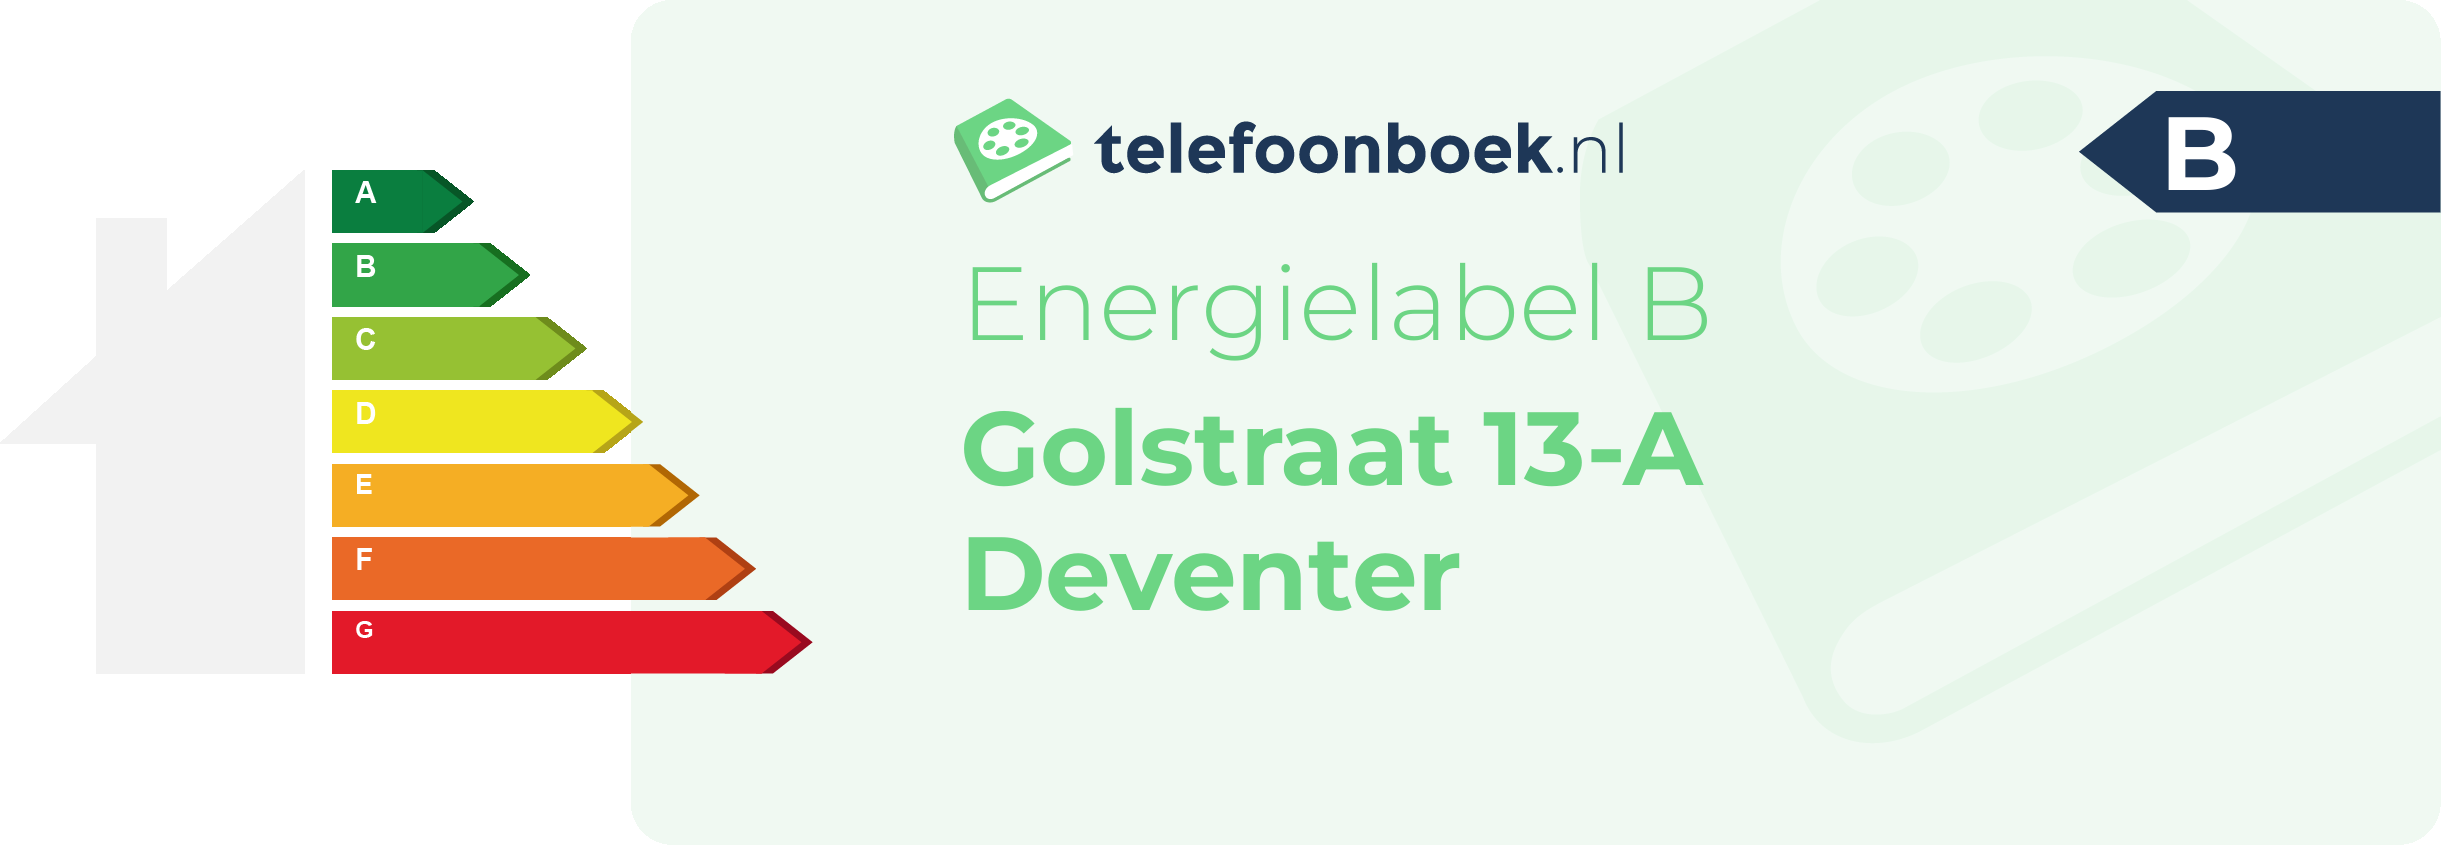 Energielabel Golstraat 13-A Deventer